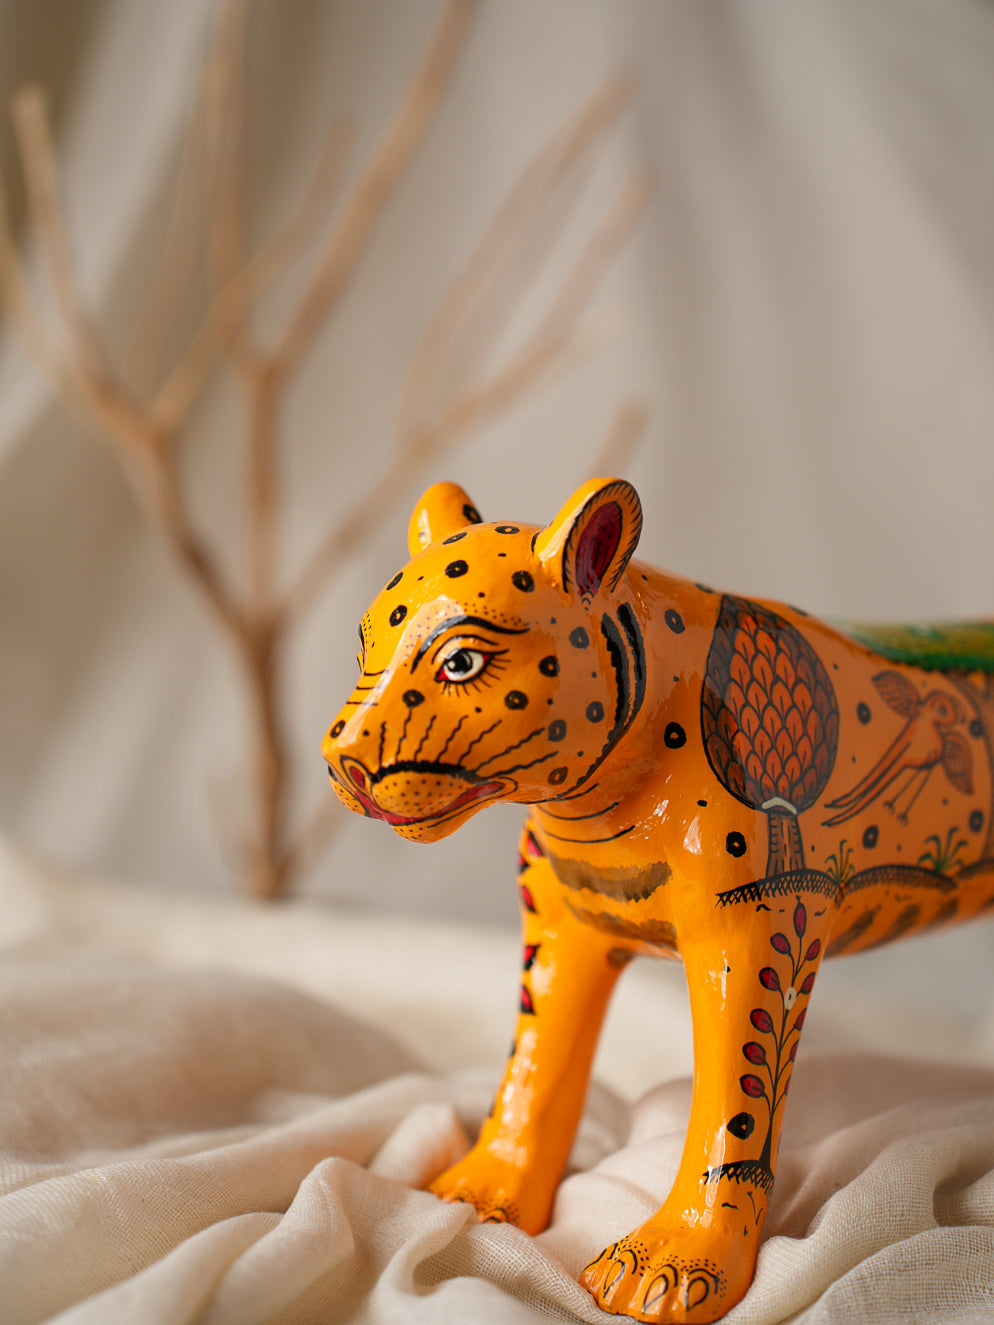 Load image into Gallery viewer, Pattachitra Art Curio - Orange Tiger